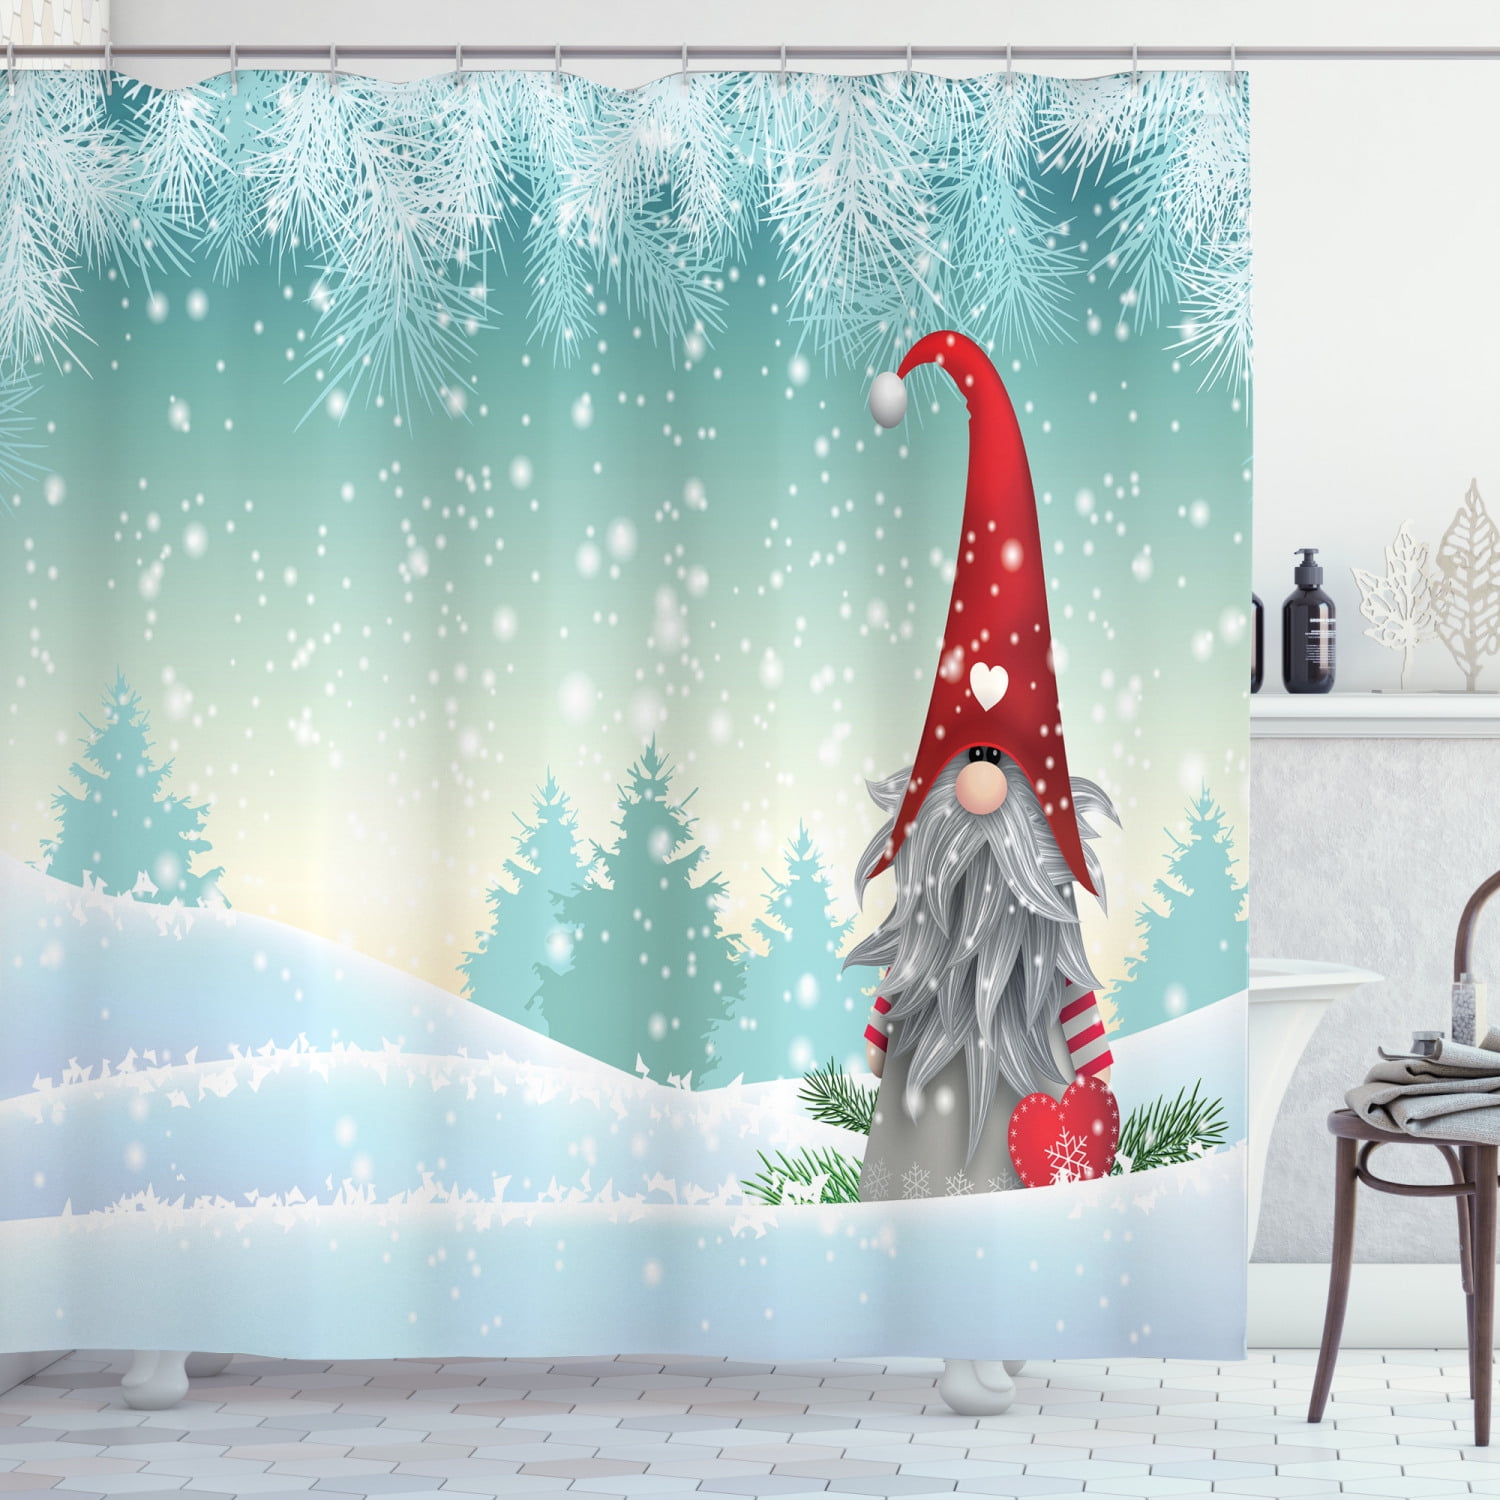 Gnome Elf Bathroom Decor Valentine's Day Shower Curtain Sets Polyester Fabric 